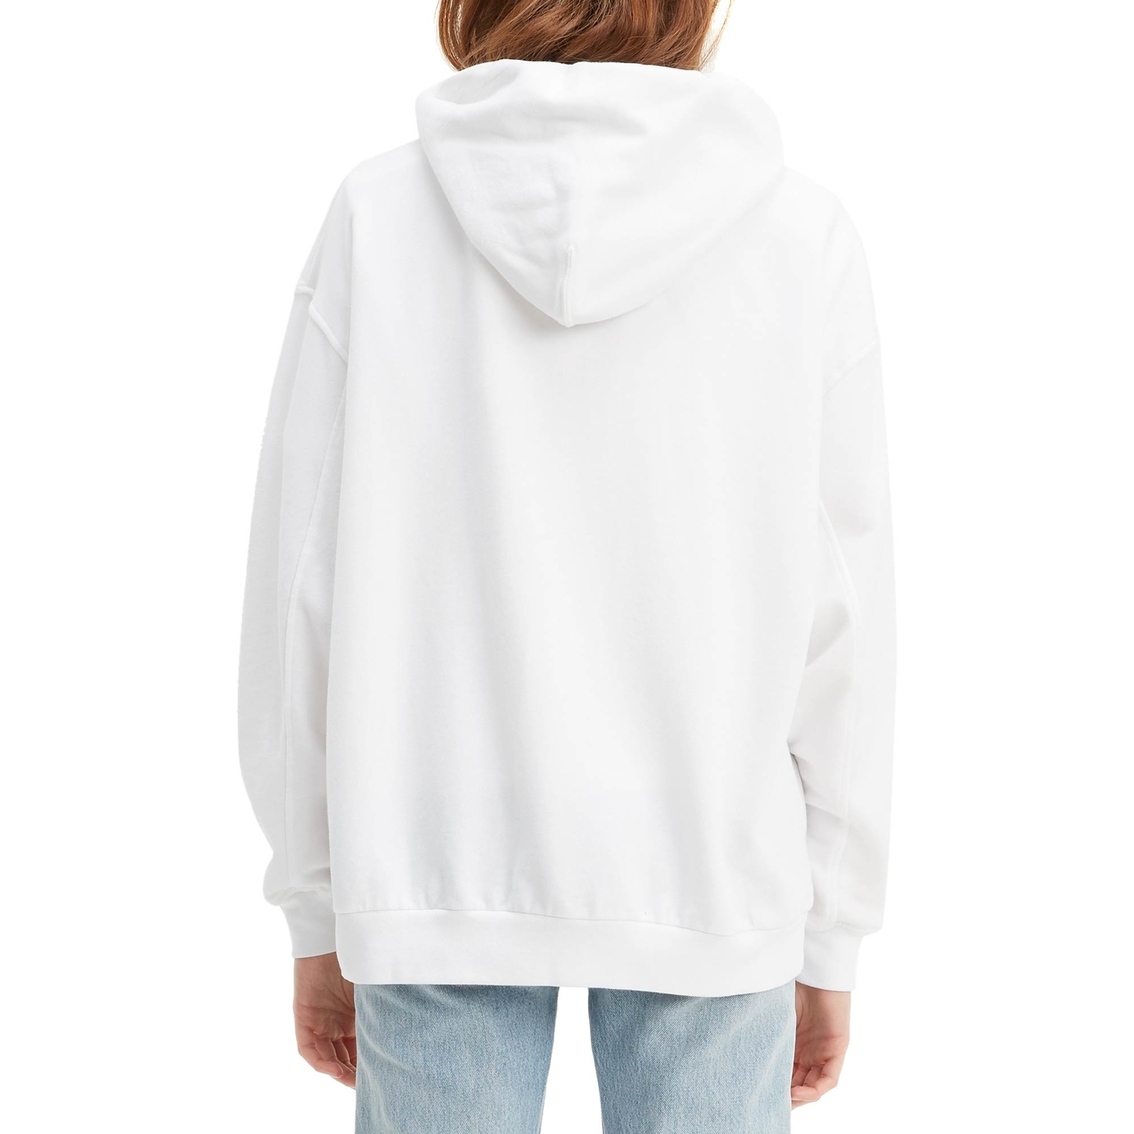 Levi's Semi Basic Hoodie | Hoodies & Sweatshirts | Clothing ...